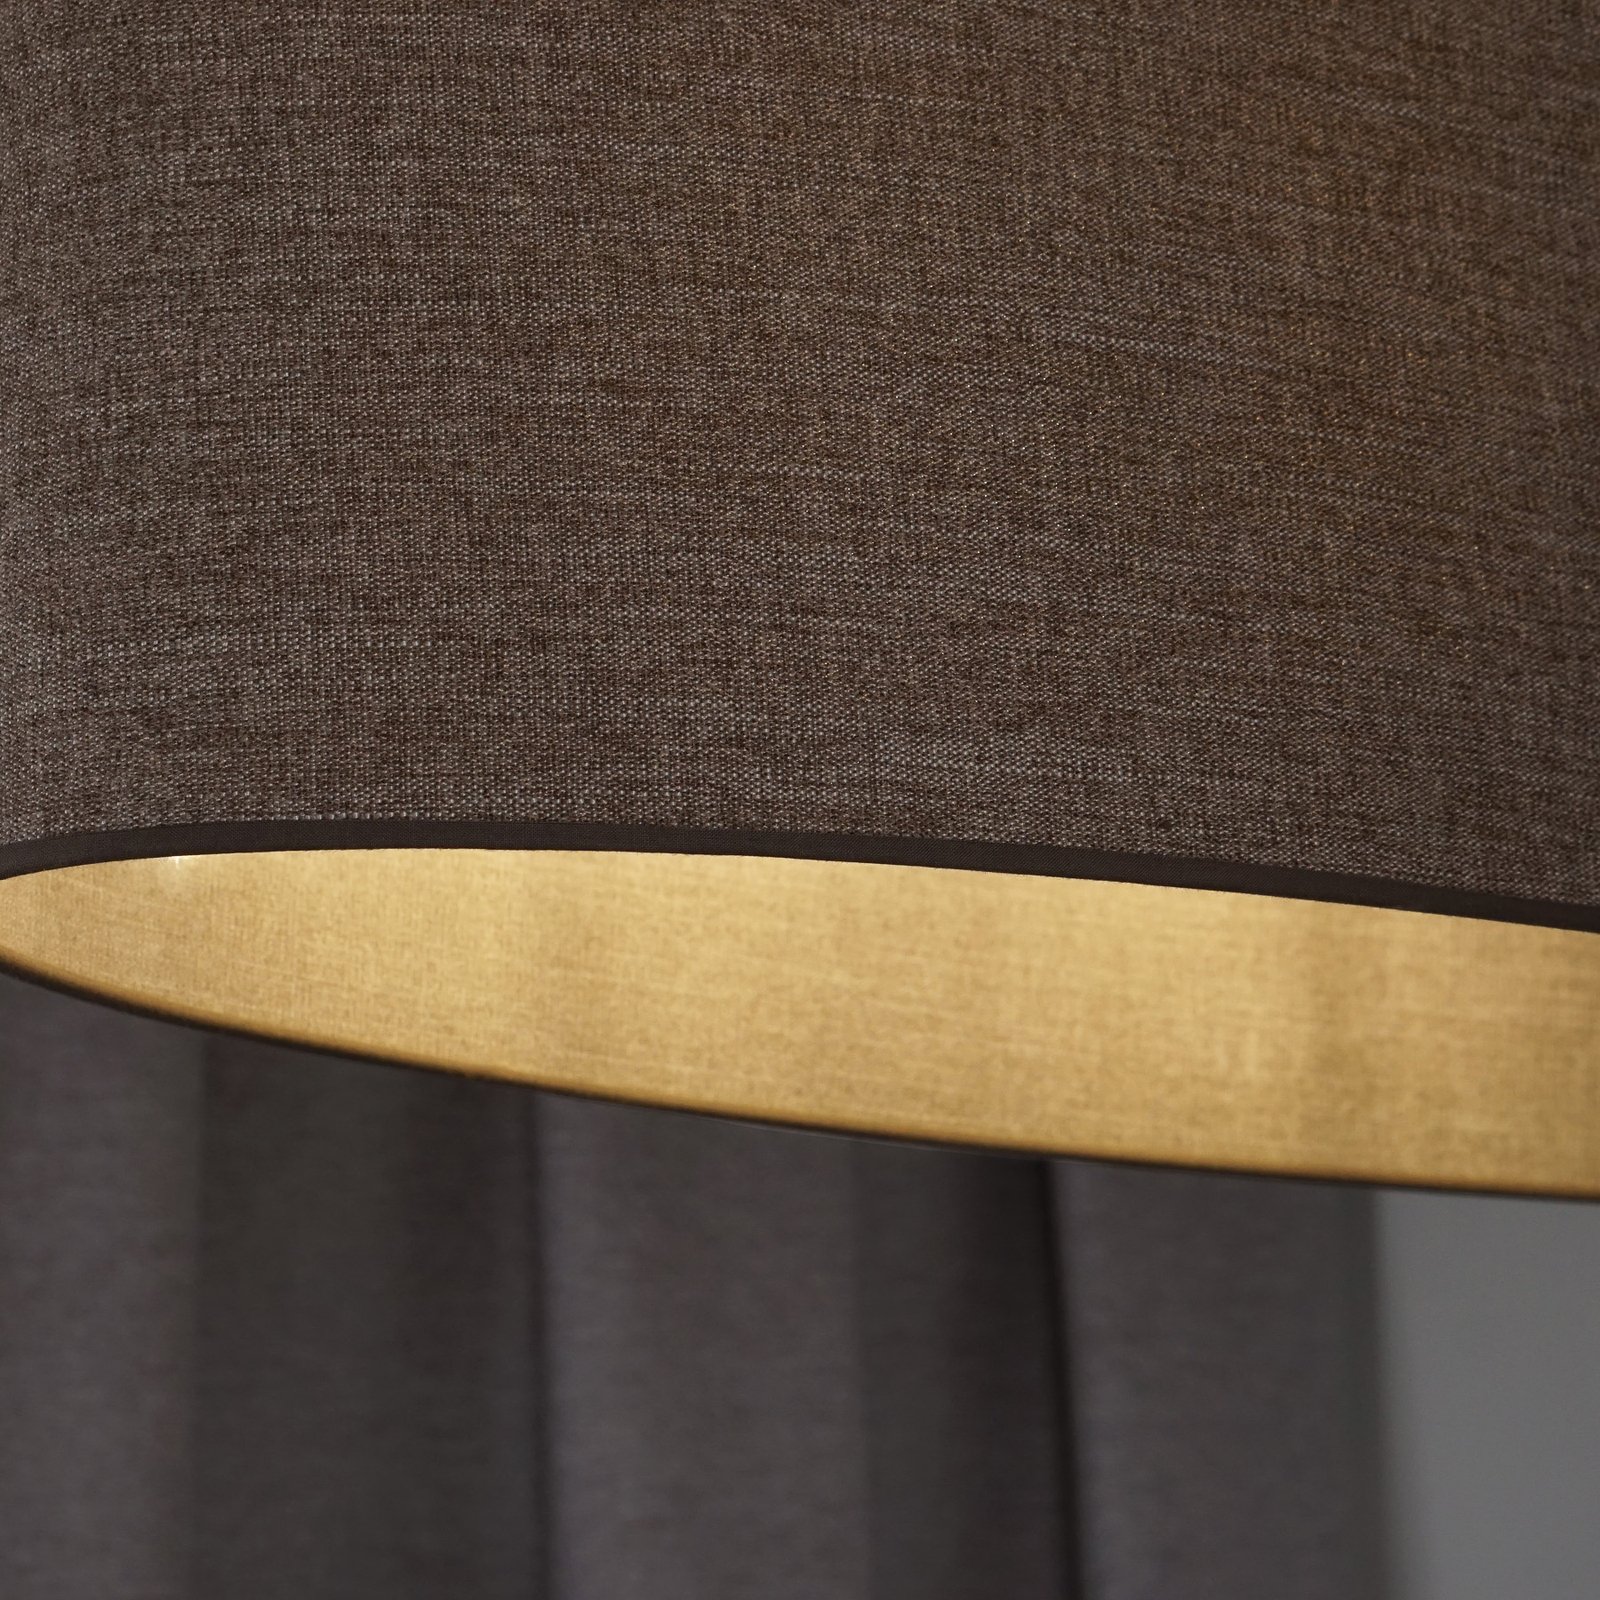 Euluna stropna lampa Celine, cappuccino, tkanina od šenila, 80 cm